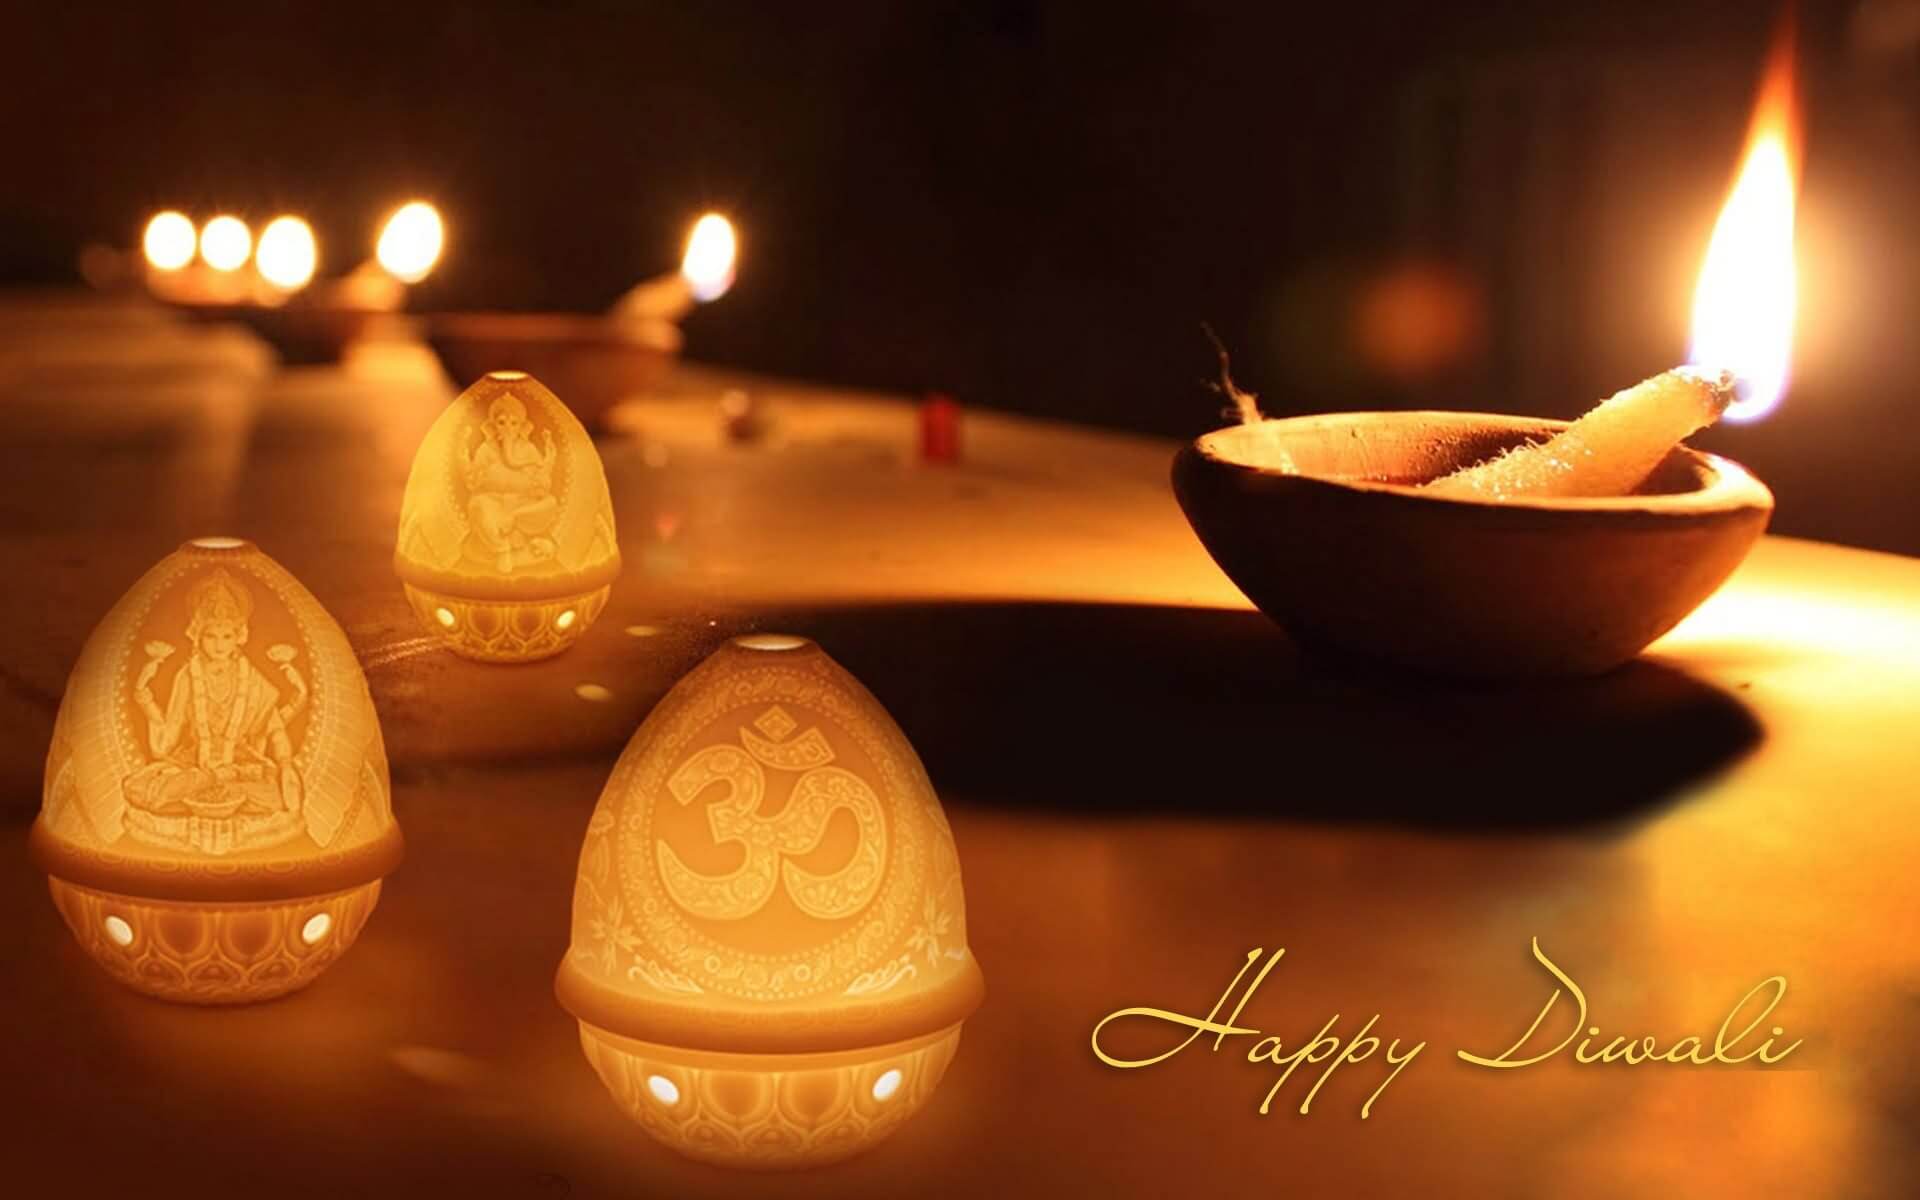 Download-Happy-Diwali-2015-HD-Wallpapers-facebook-mobile-desktop-cgfrog-23